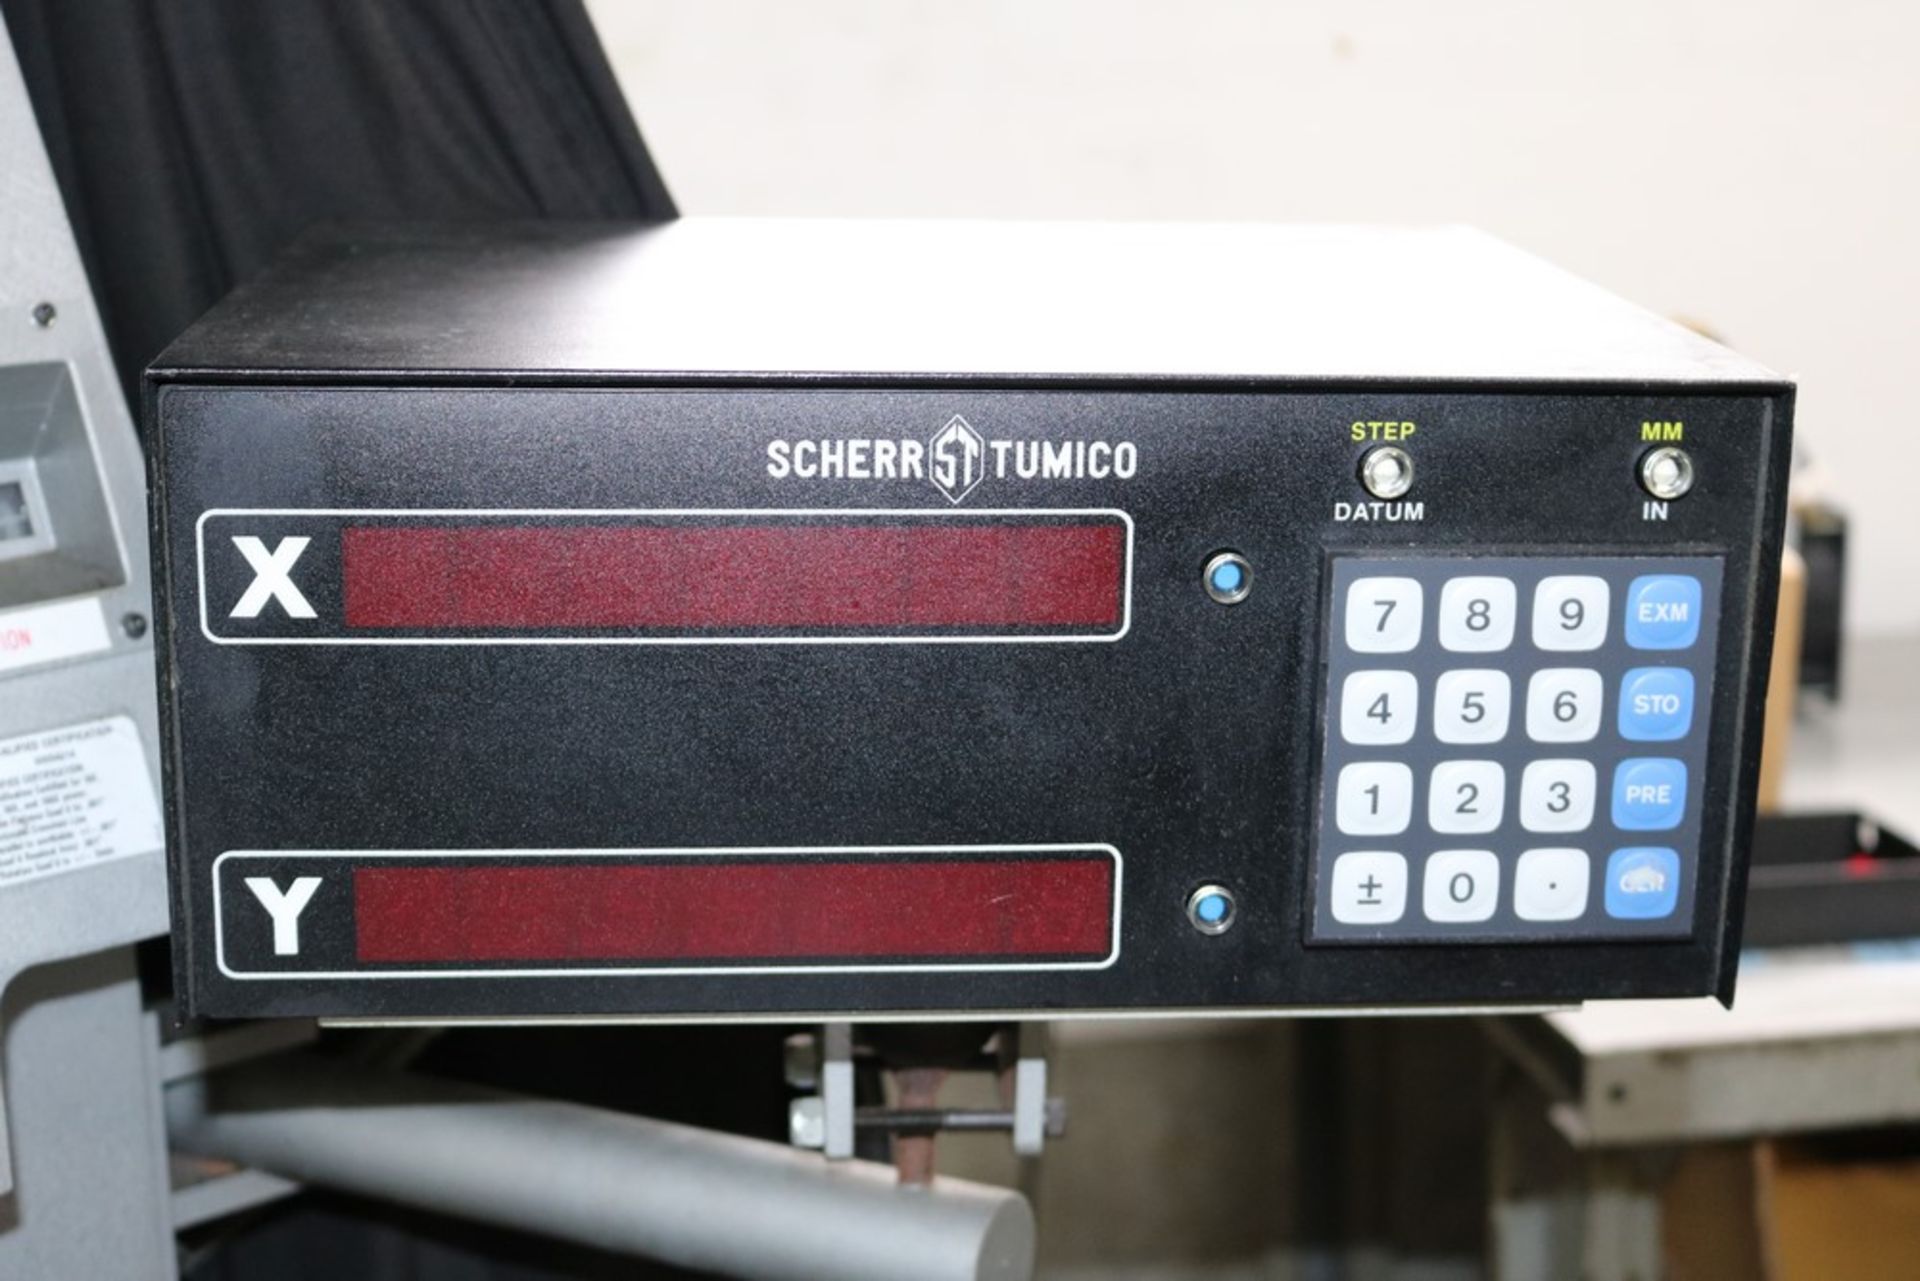 Scherr Tumico Large Capacity Optical Comparator with Scherr Tumico DRO, S/N 862 - Image 6 of 11